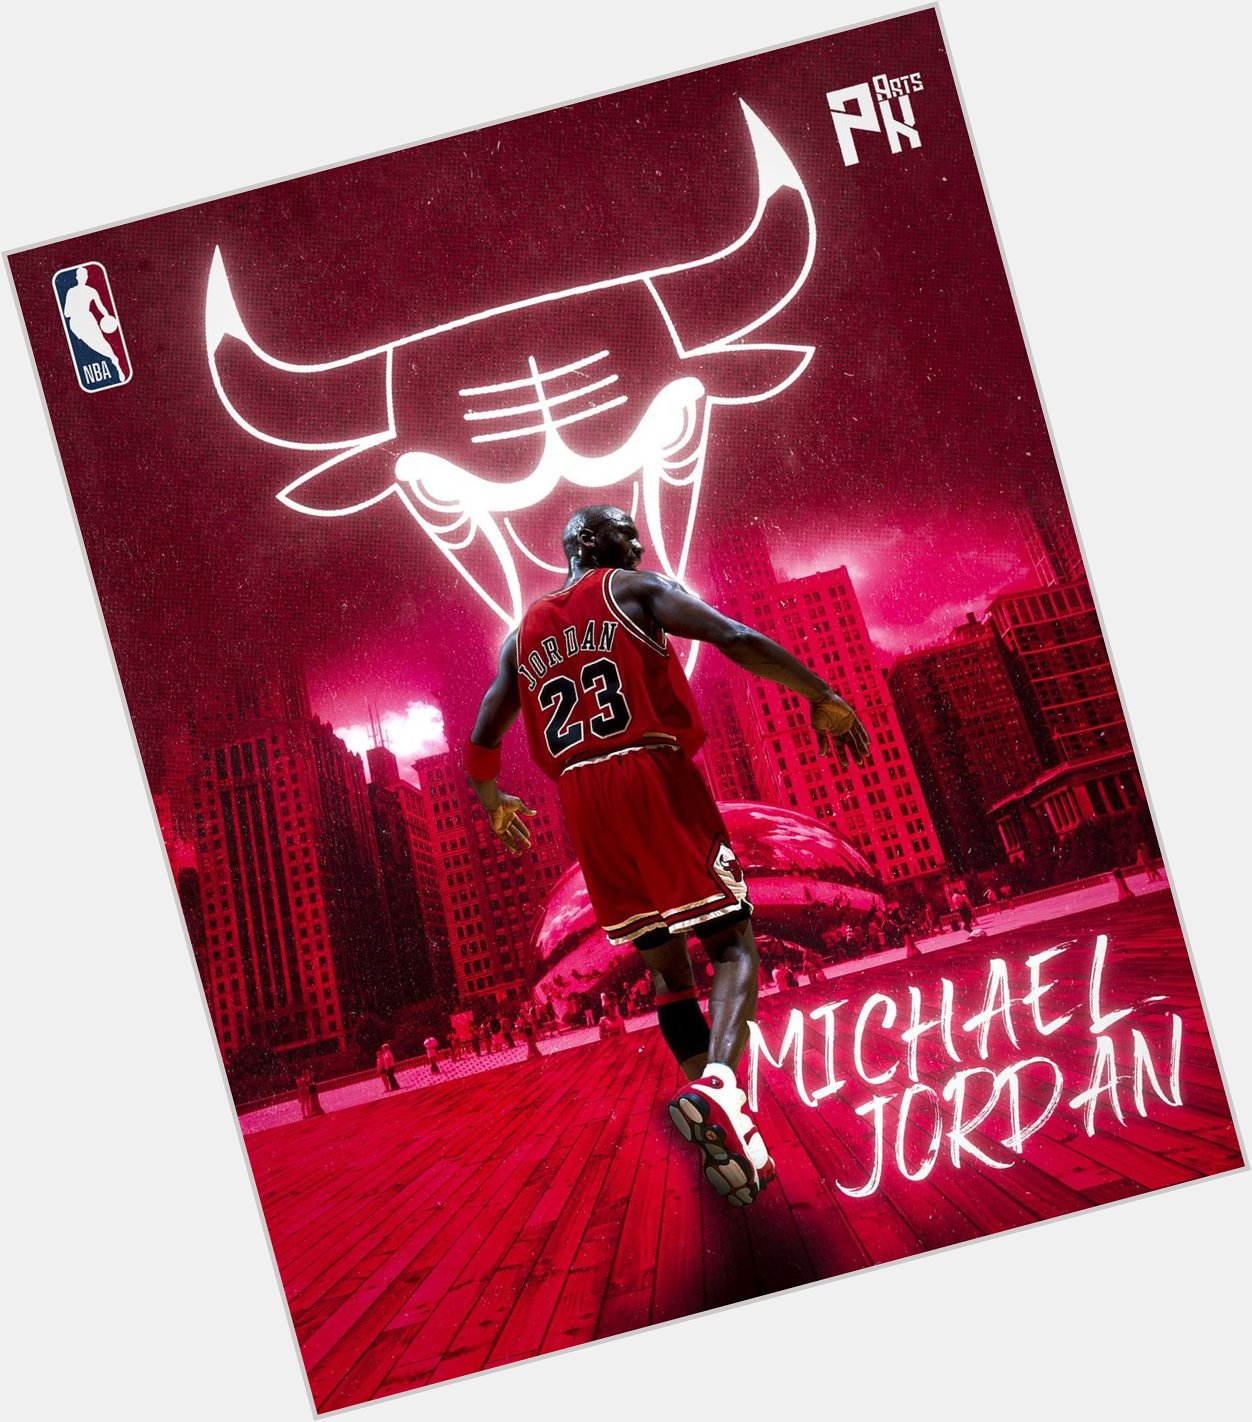 Happy Birthday, Michael Jordan!

6X NBA CHAMPION
6X FINALS MVP
5X MVP 
14X ALL STAR 
1X DPOY   